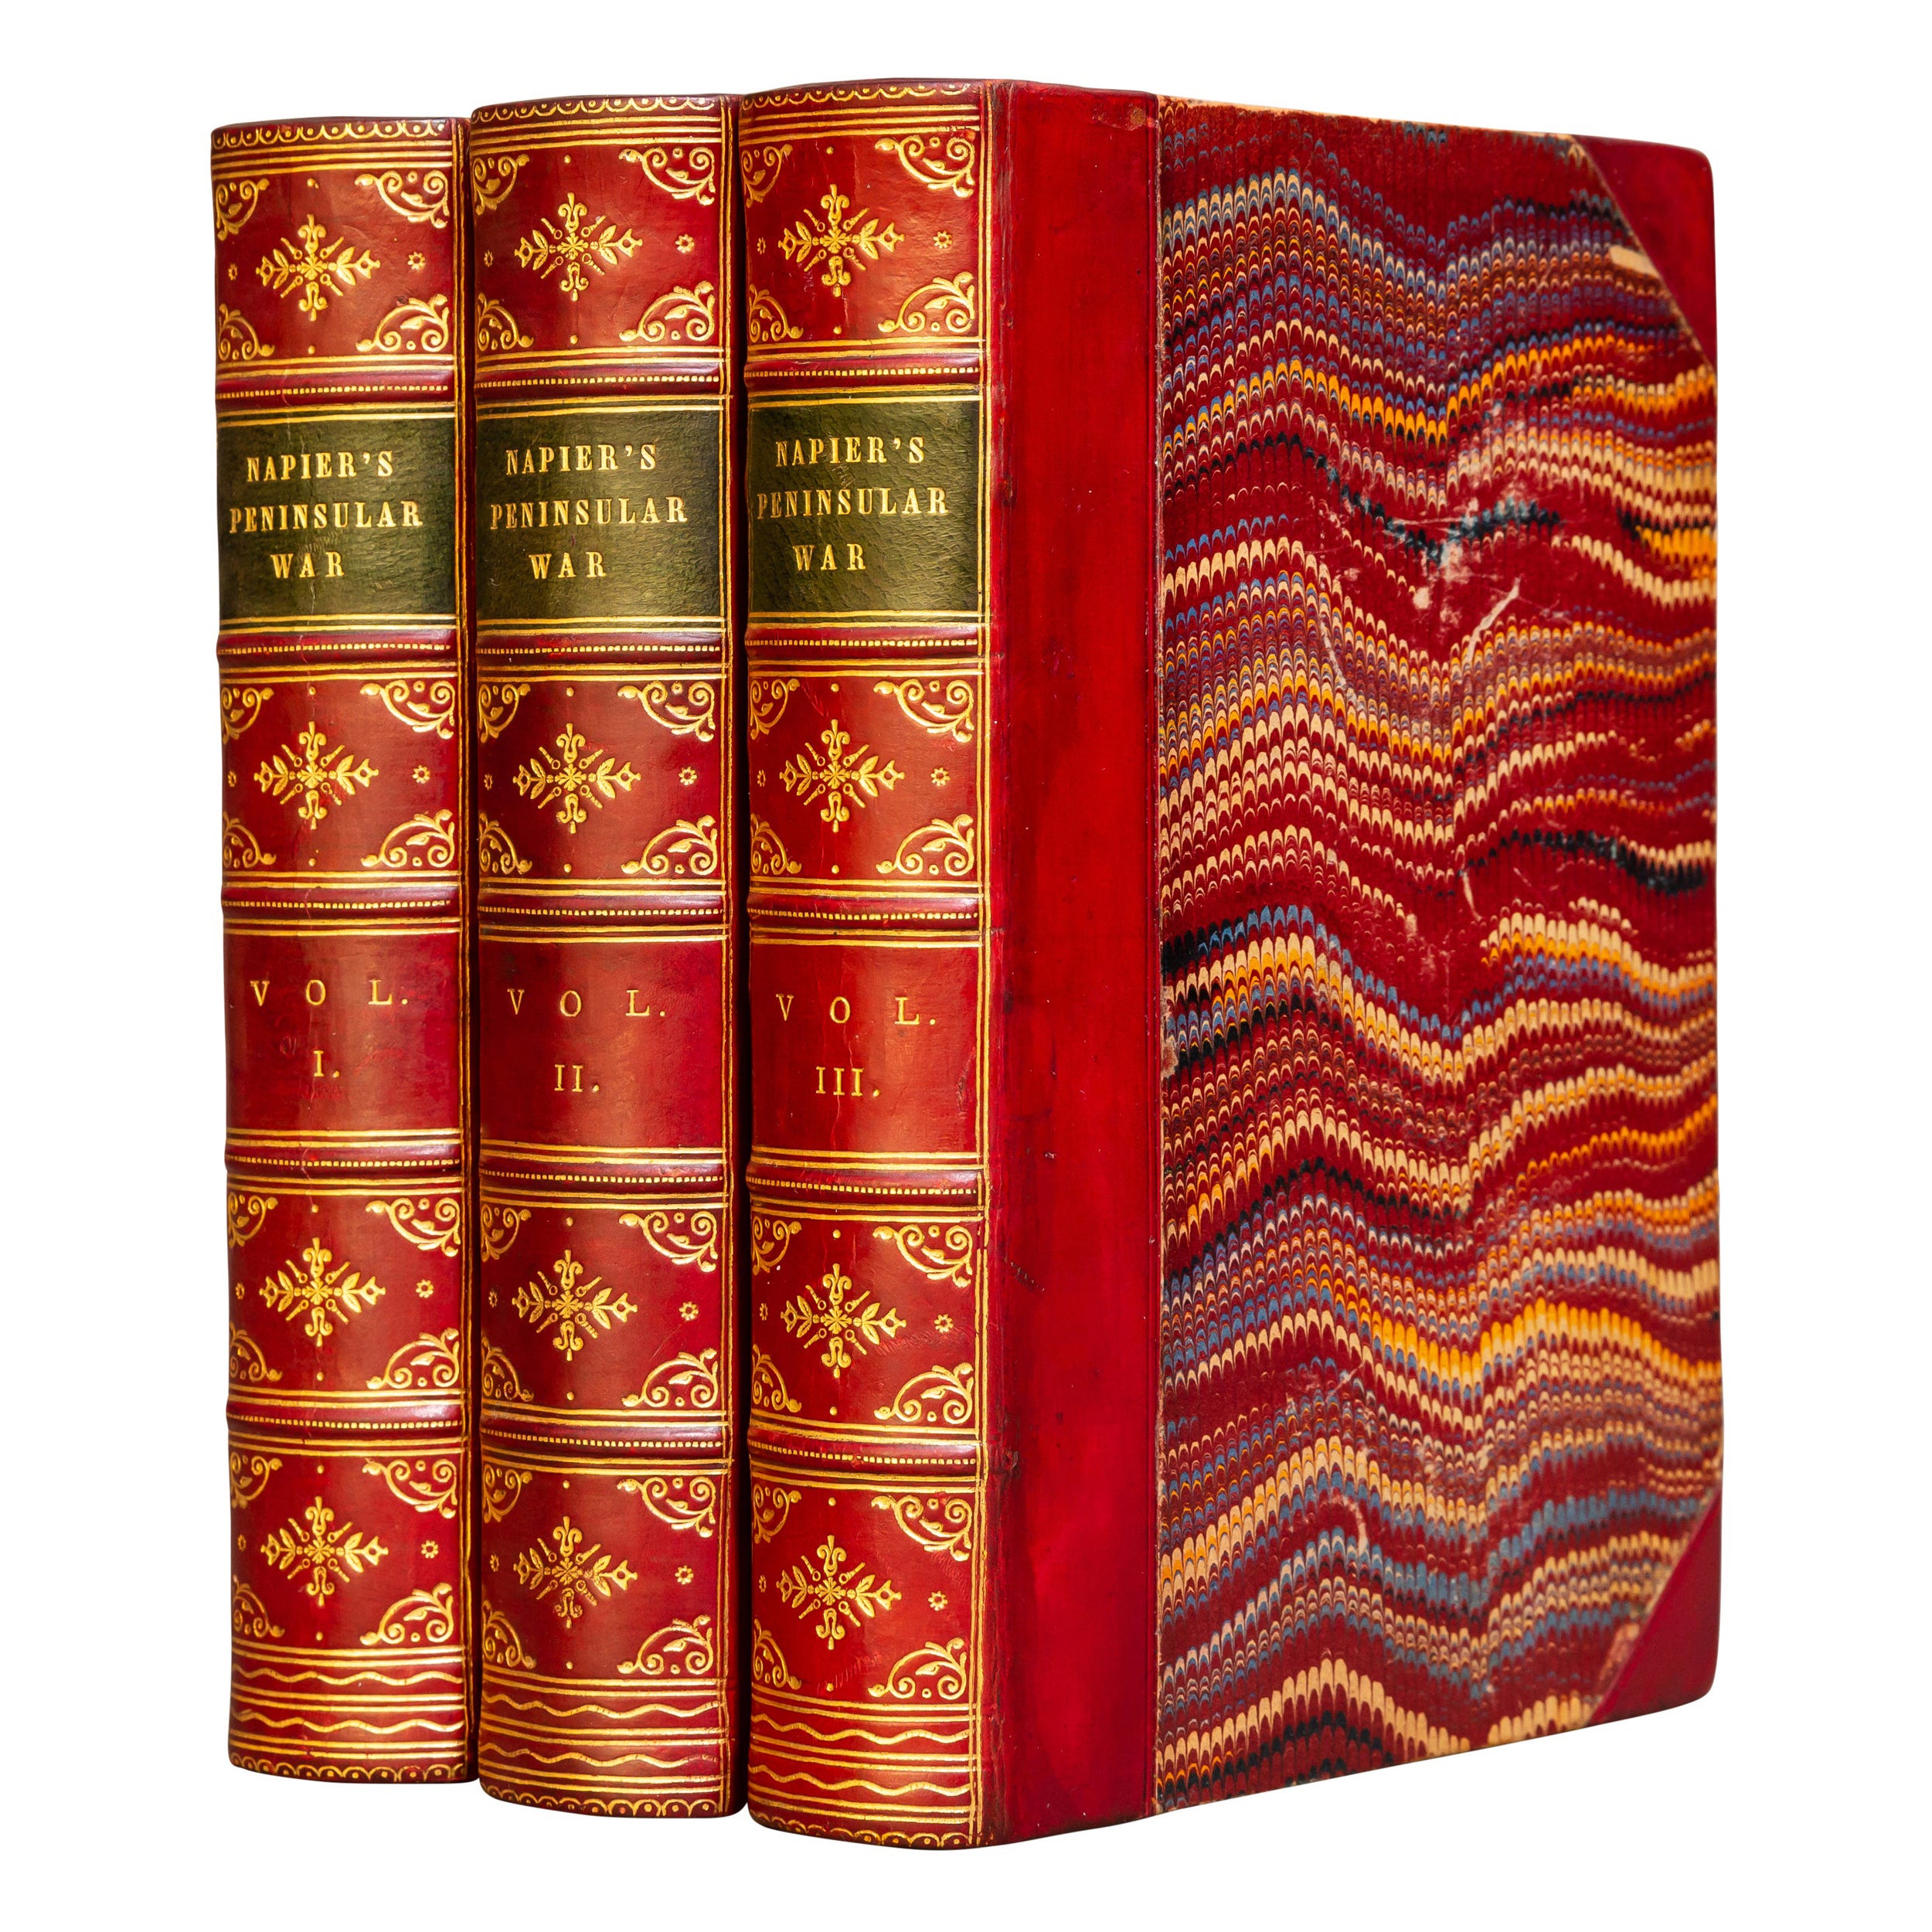 'Book Sets' 3 Volumes. W. F. P. Napier, History of the Peninsular War